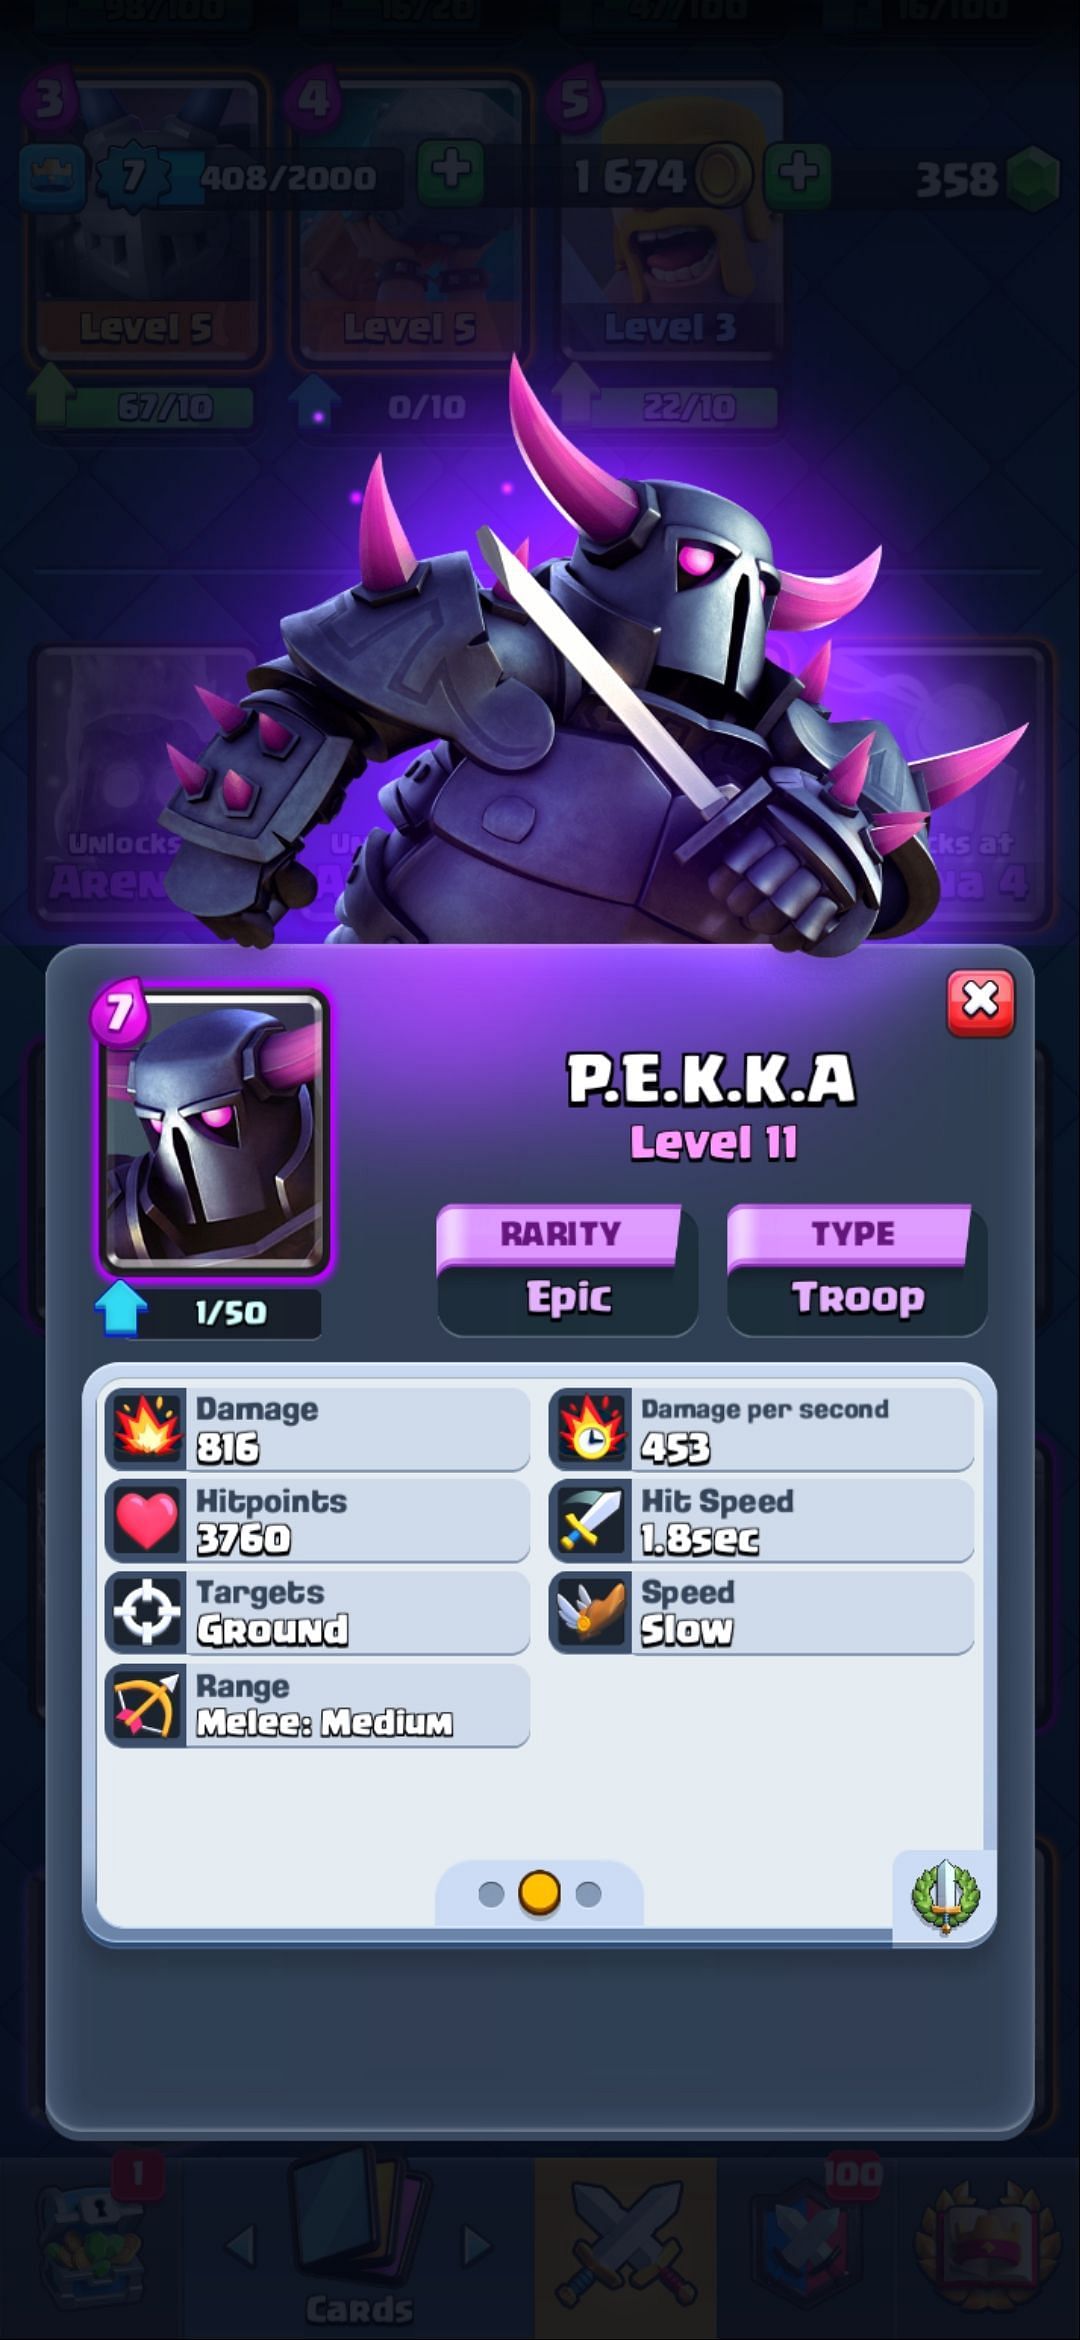 The PEKKA card (Image via Sportskeeda)